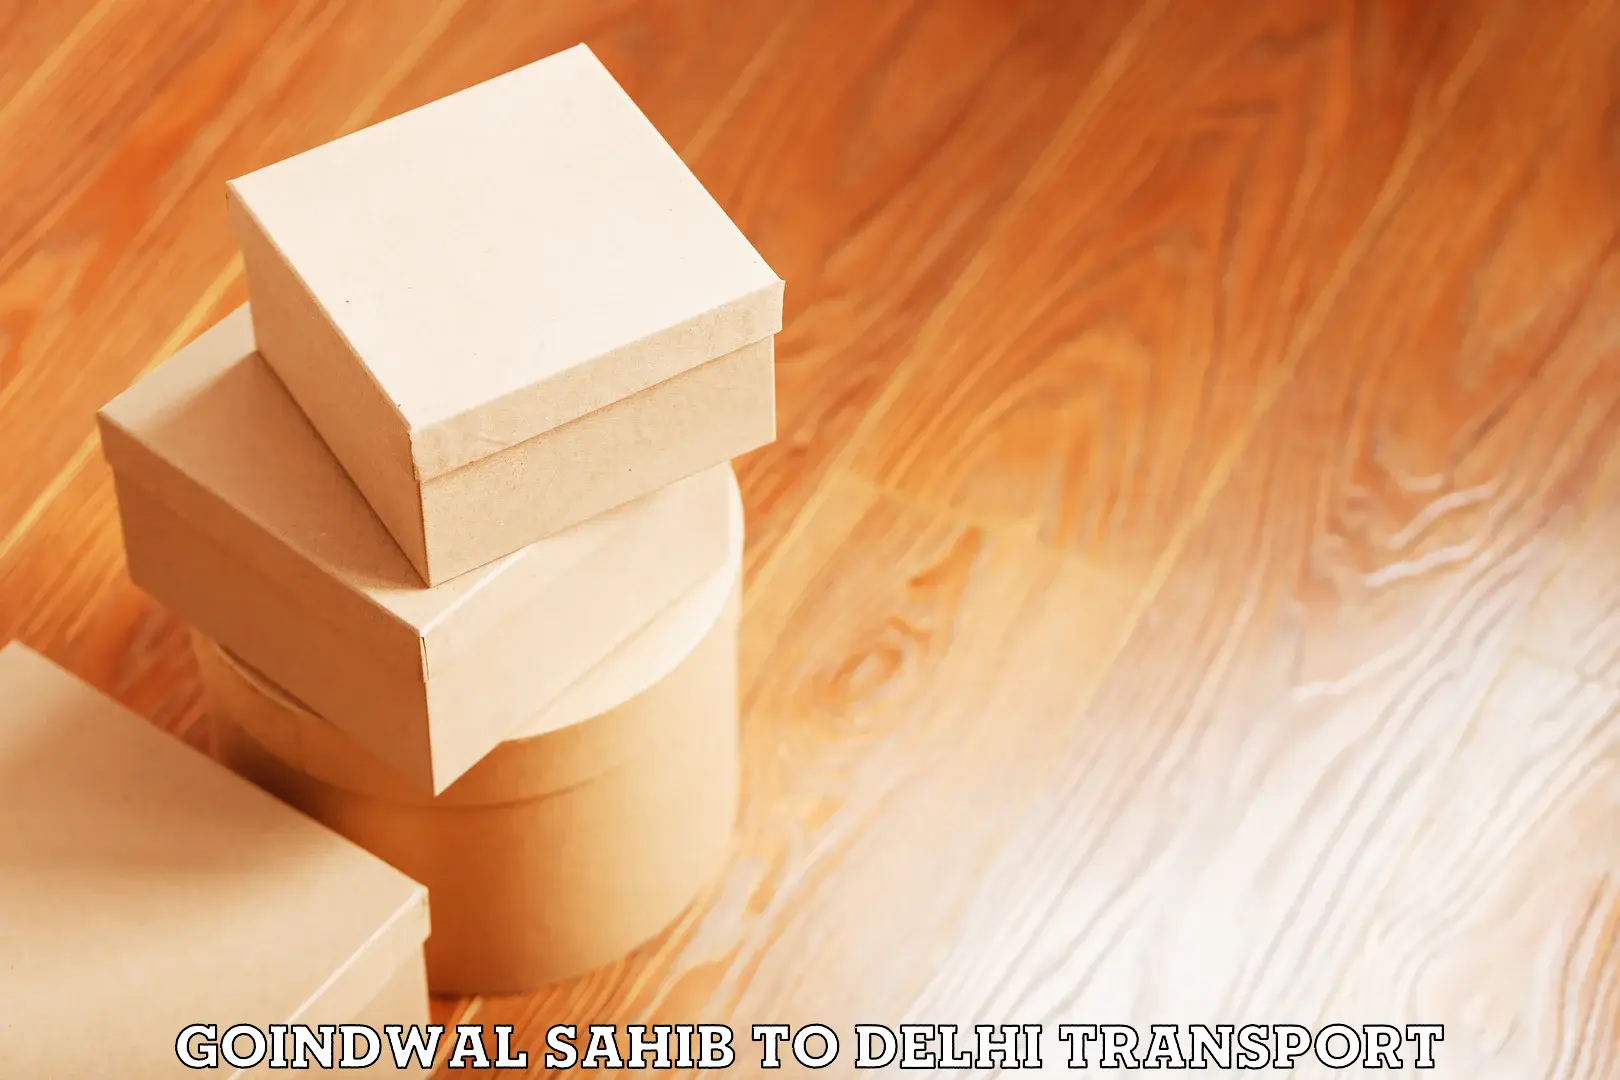 Commercial transport service Goindwal Sahib to Delhi